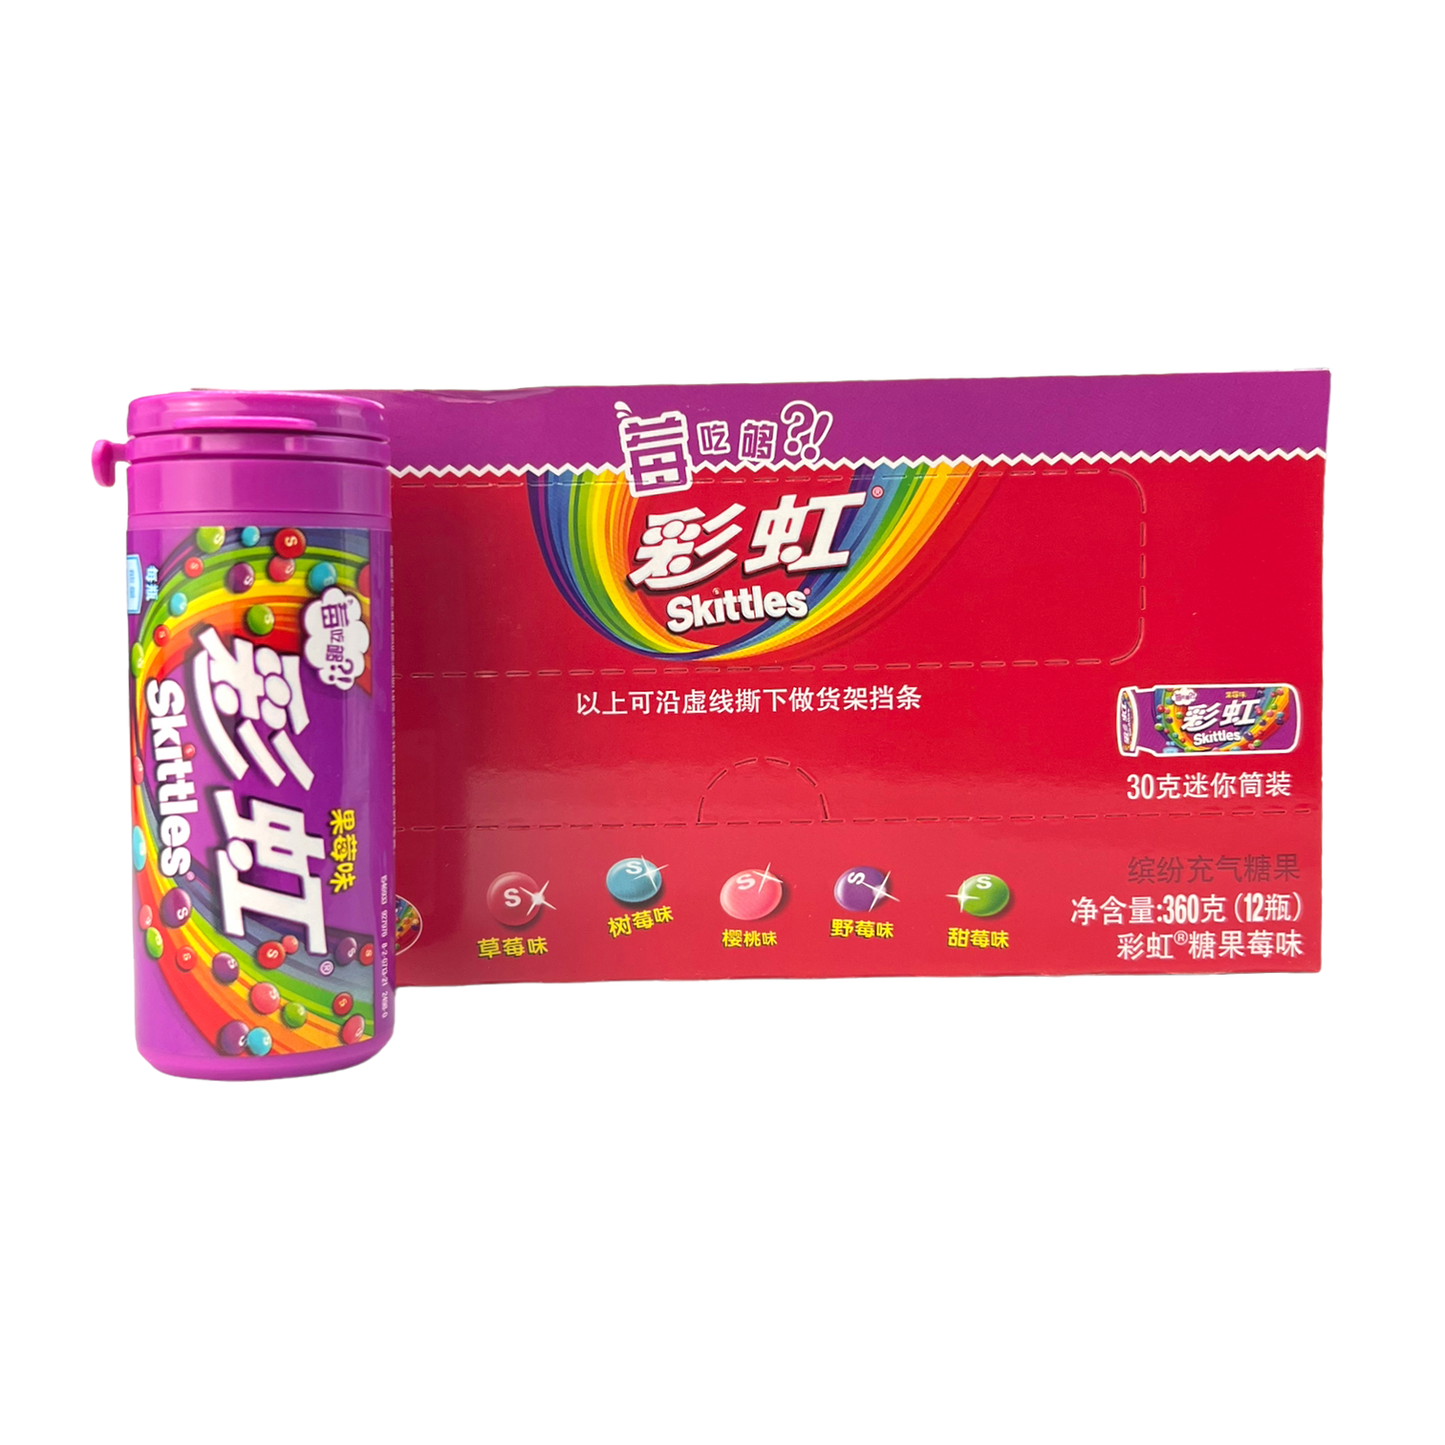 Flavored Skittles Tubes 12pk Display